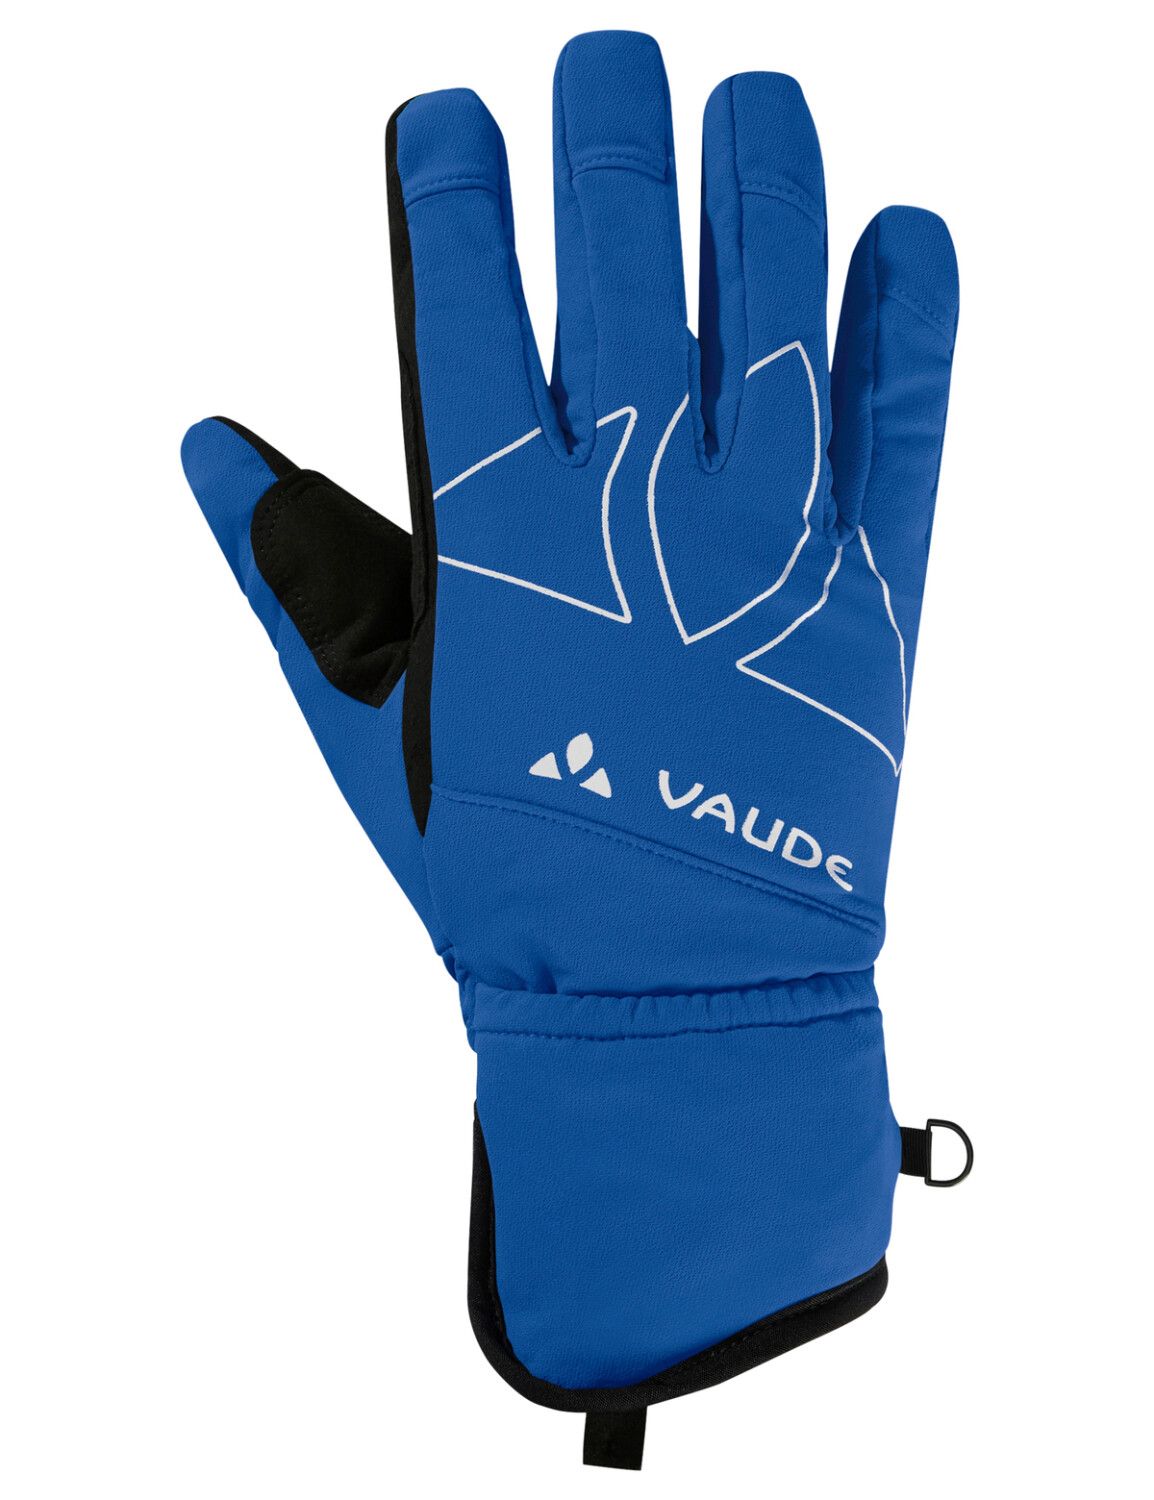 VAUDE La Varella Gloves (Bild 6)